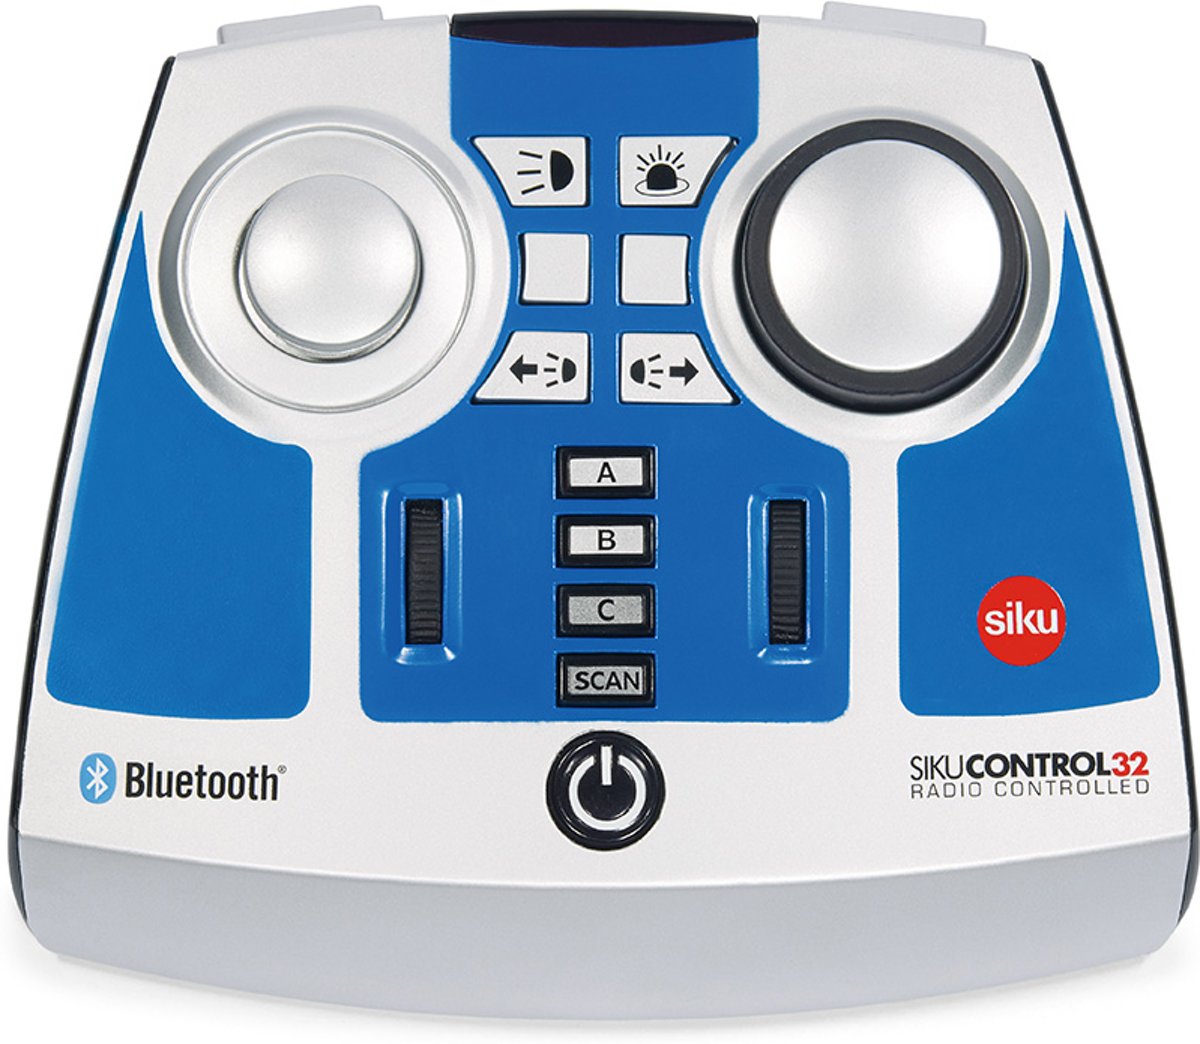 Bluetooth remote control